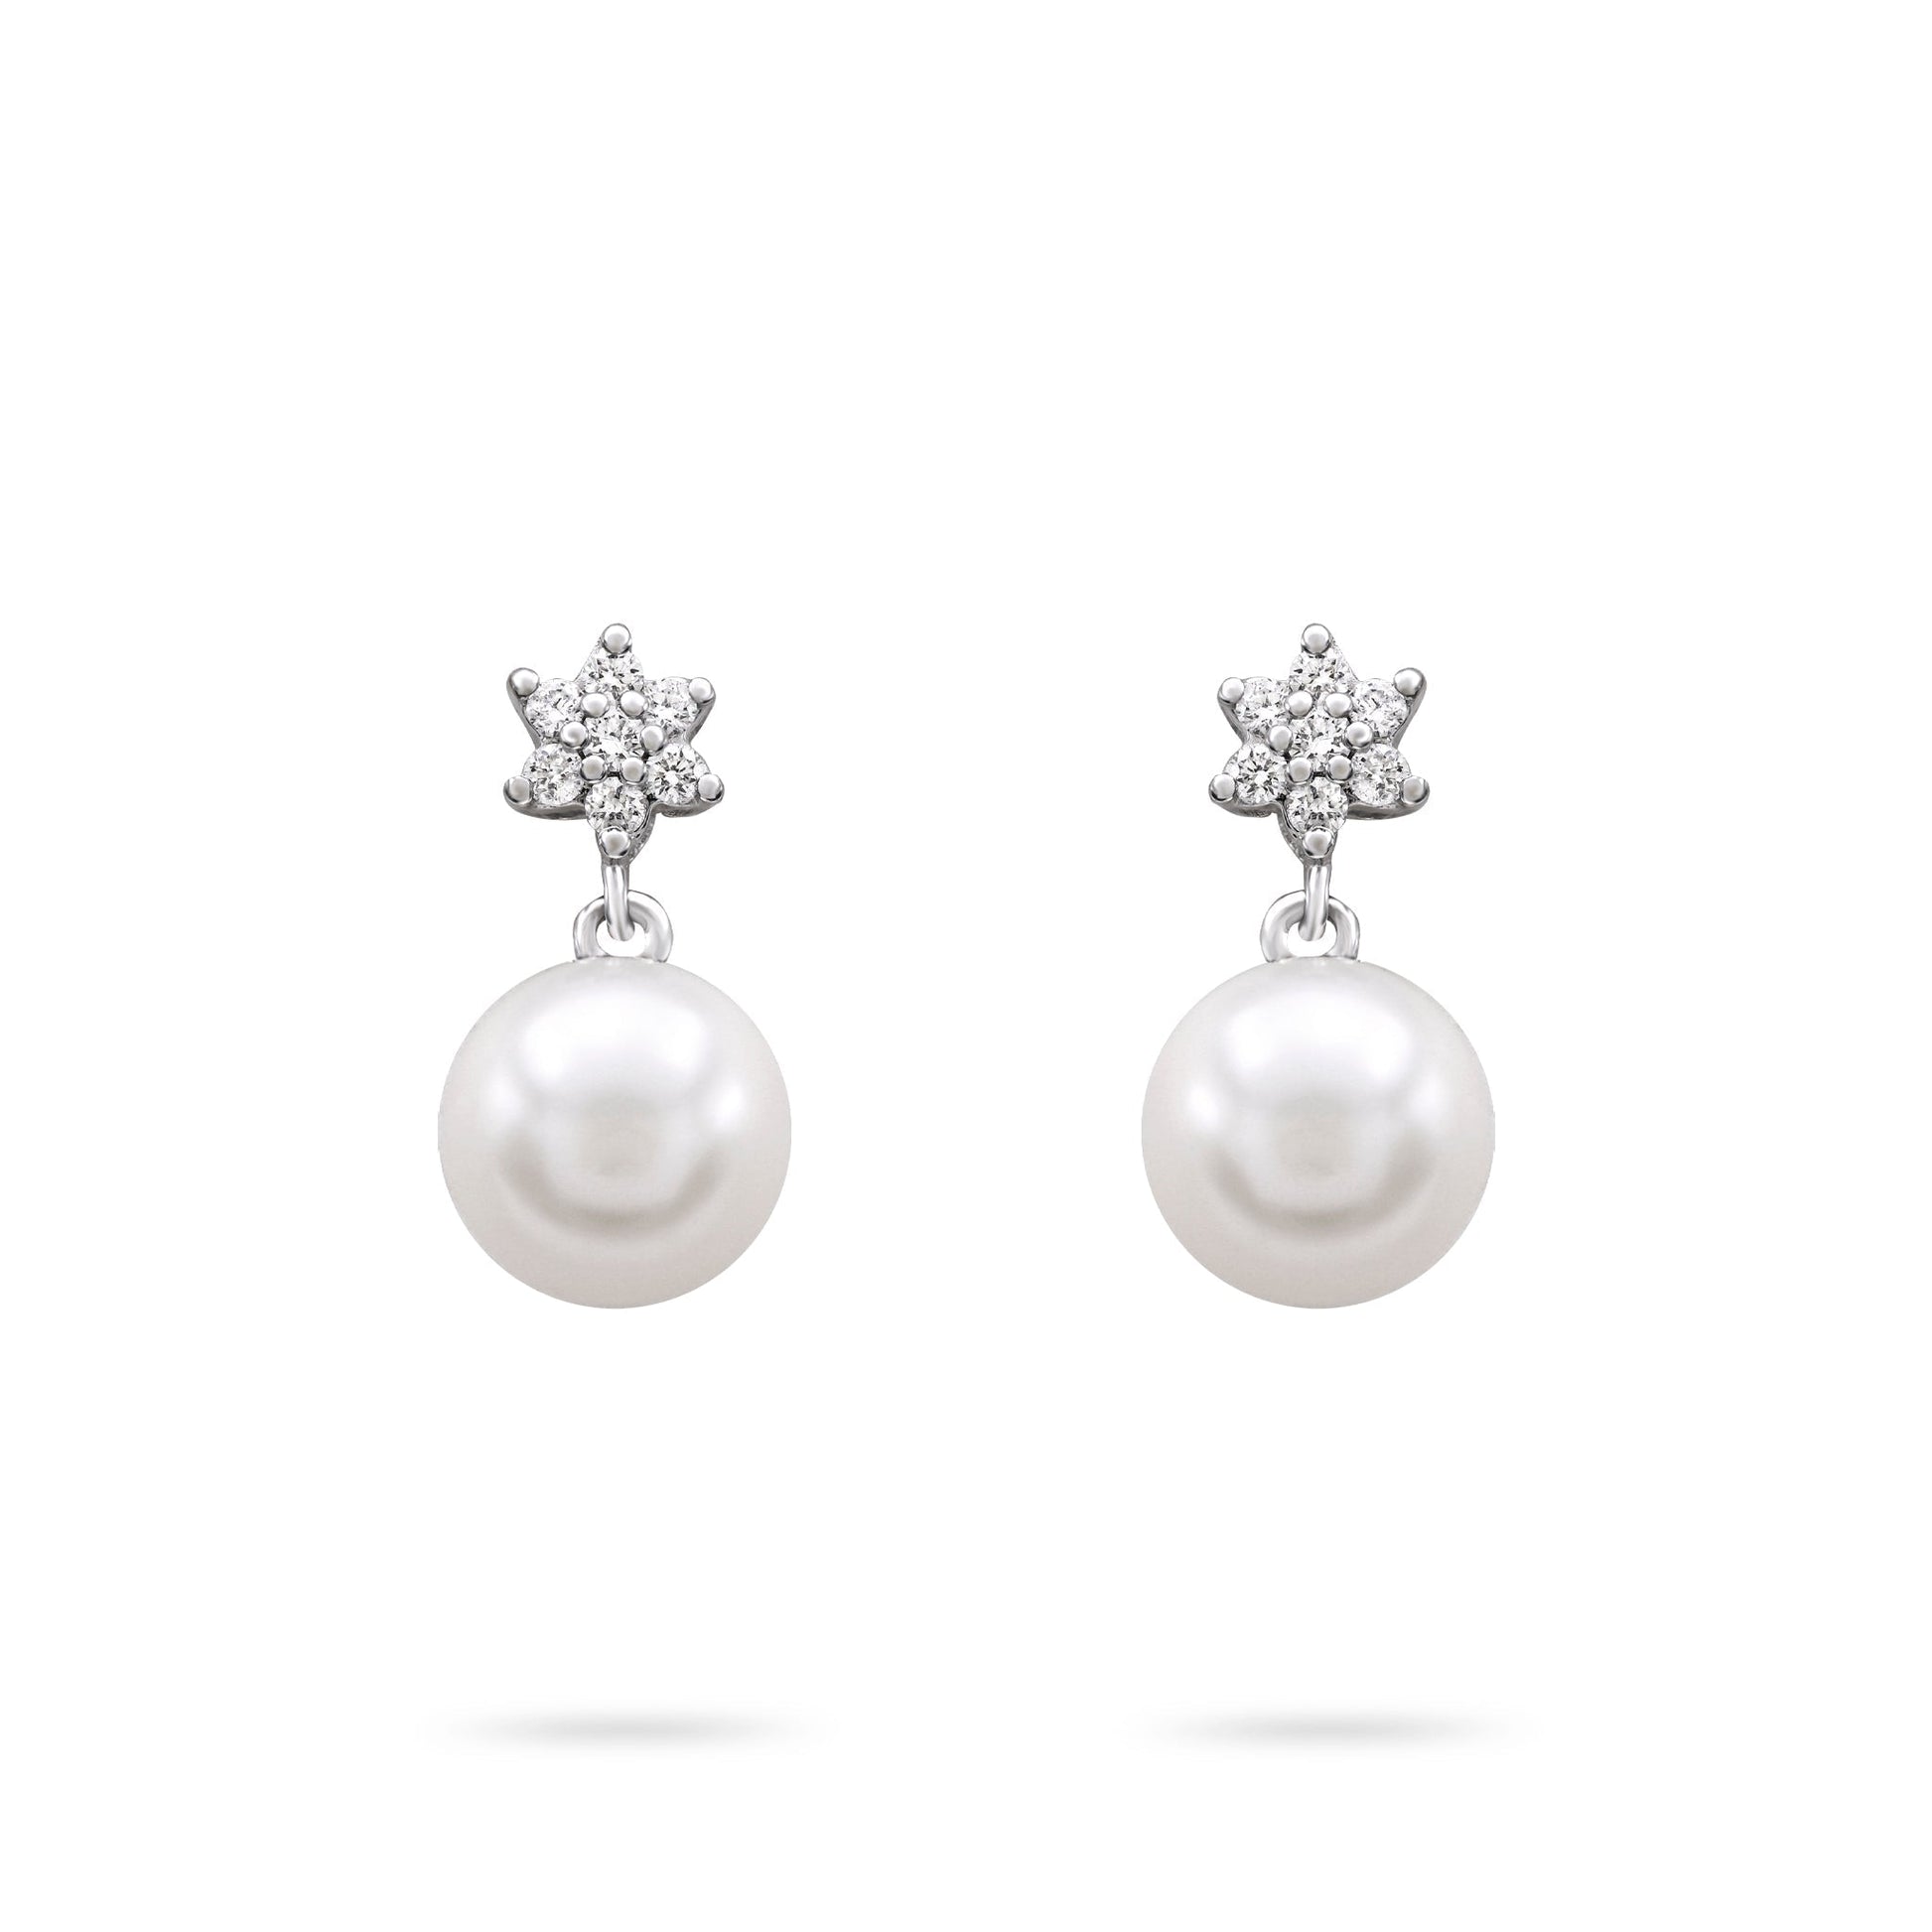 Gilda Jewelry Pearls | Diamond Earrings | 0.16 Cts. | 14K Gold - White / Pair / earring Zengoda Shop online from